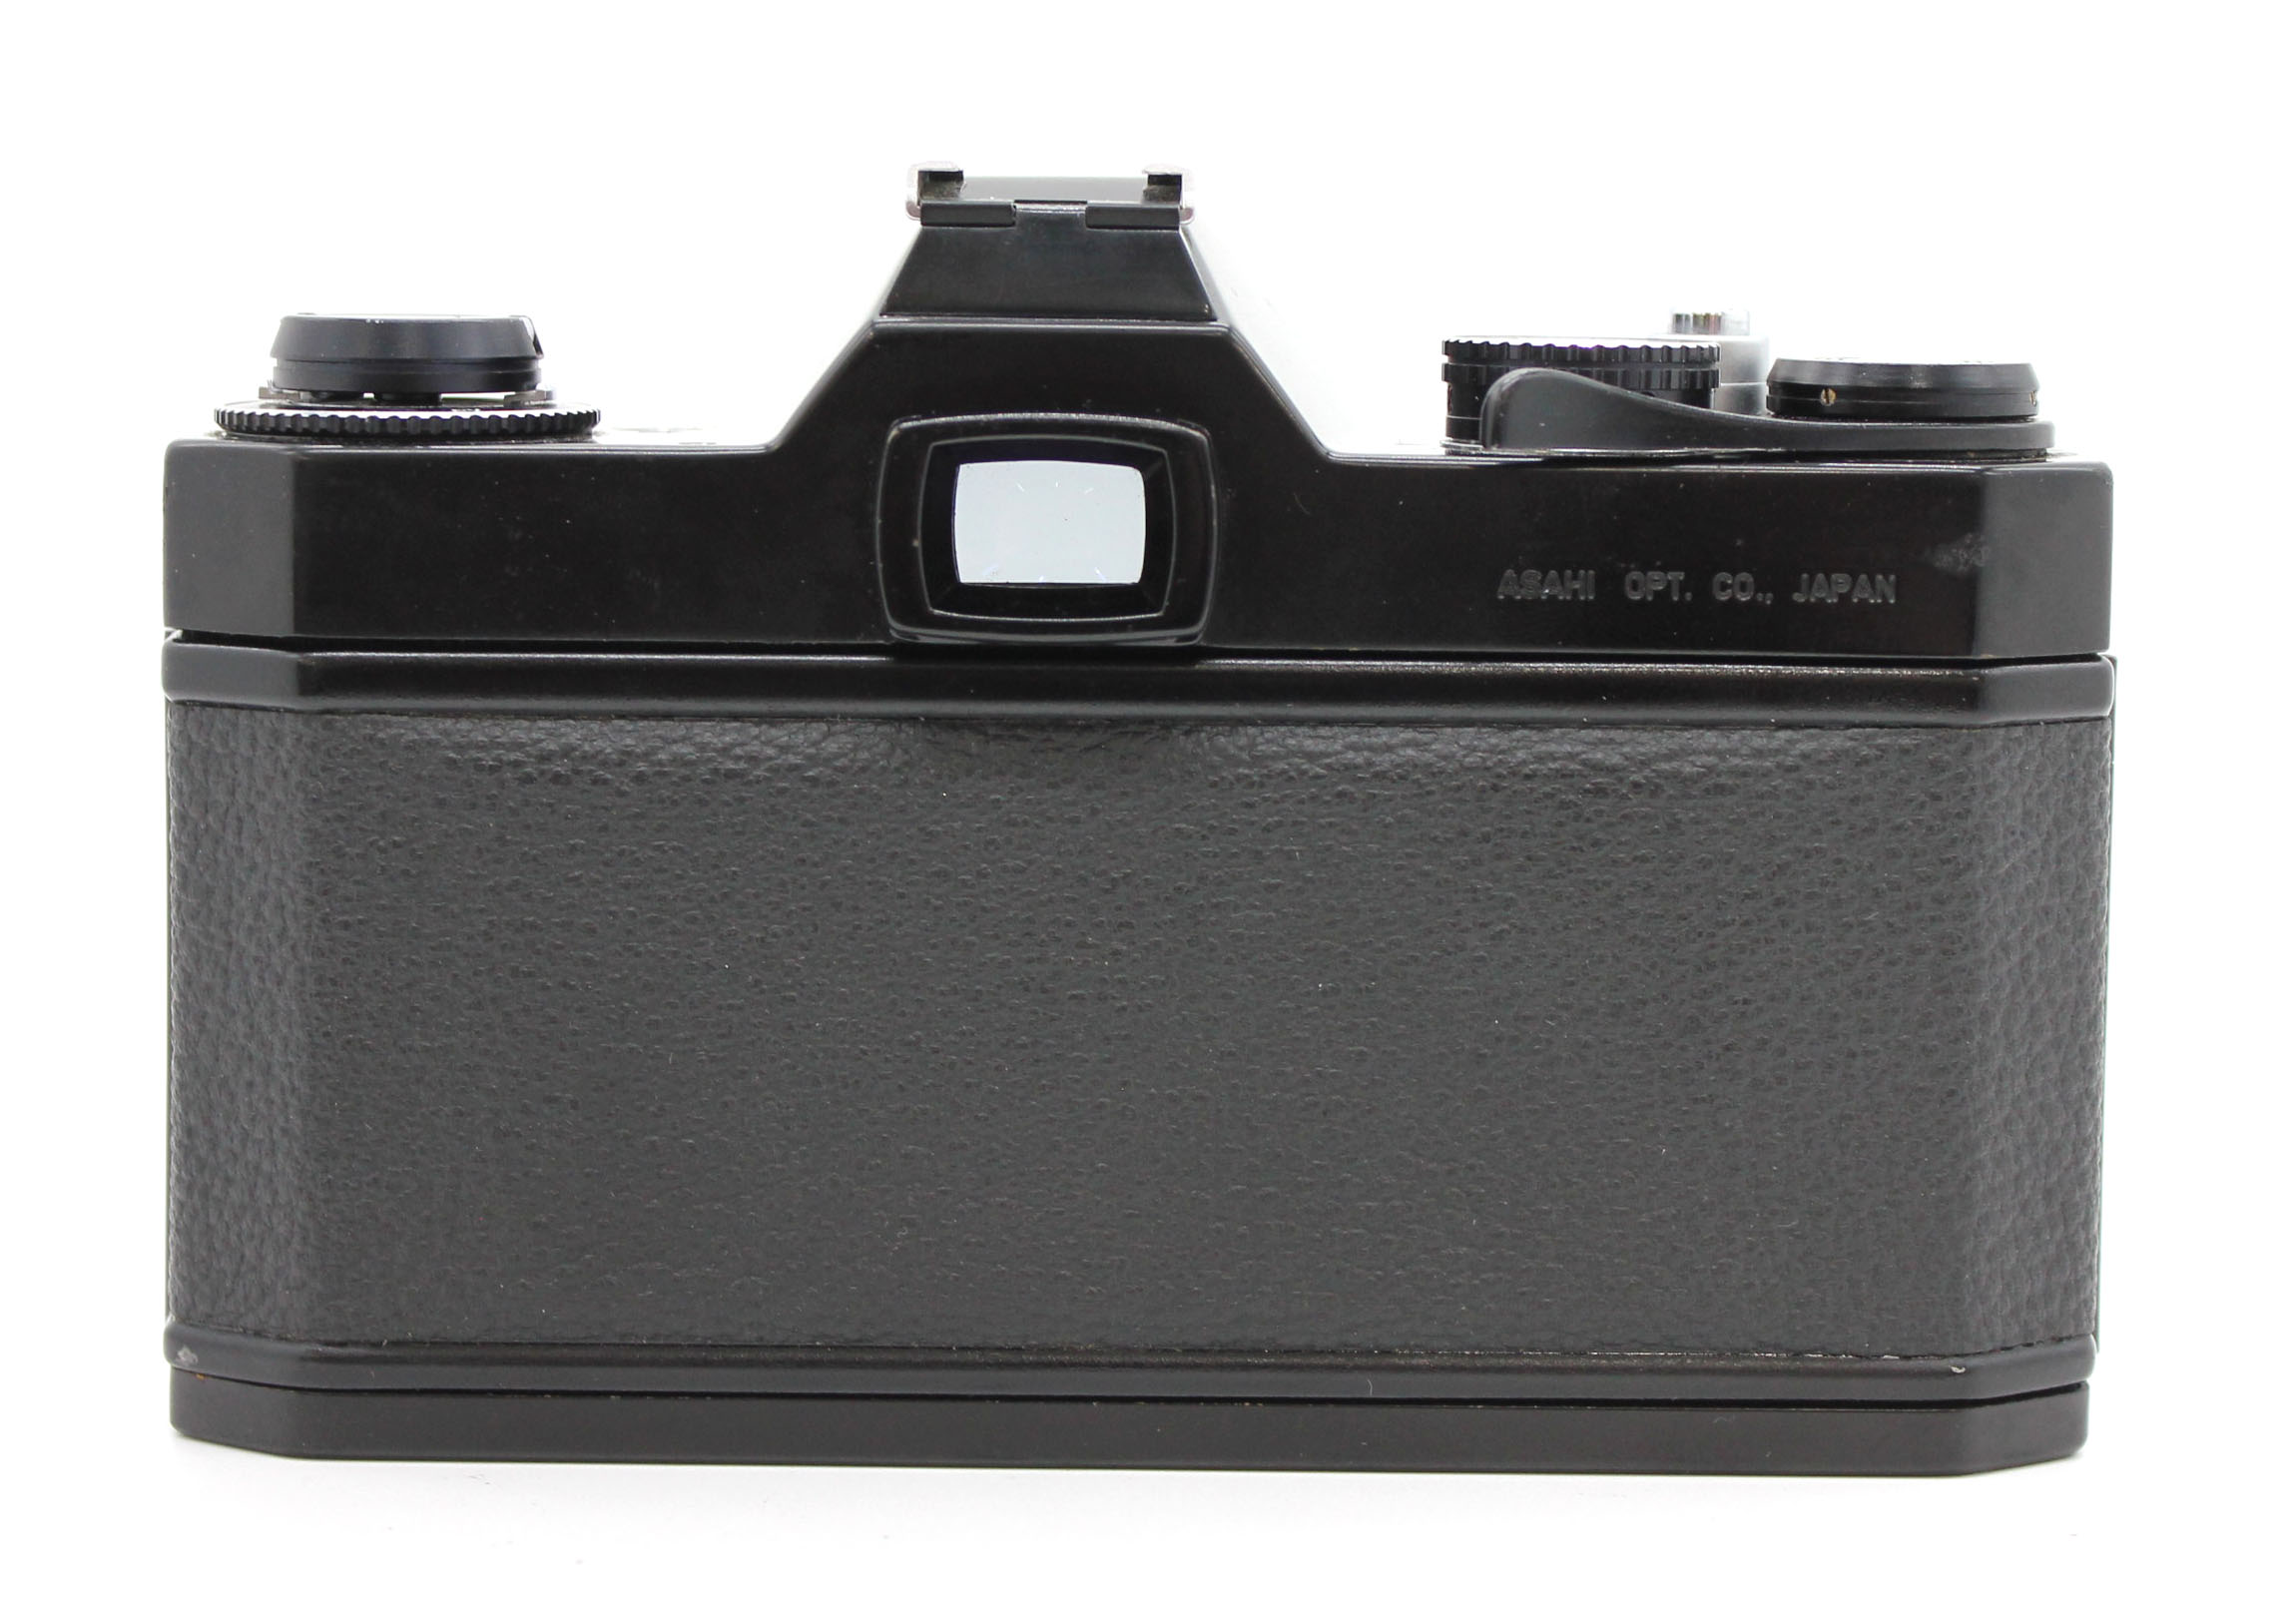 Asahi Pentax Spotmatic F SPF 35mm SLR Camera Black w/ SMC Super-Multi-Coated Takumar 55mm F/1.8 Lens from Japan Photo 6